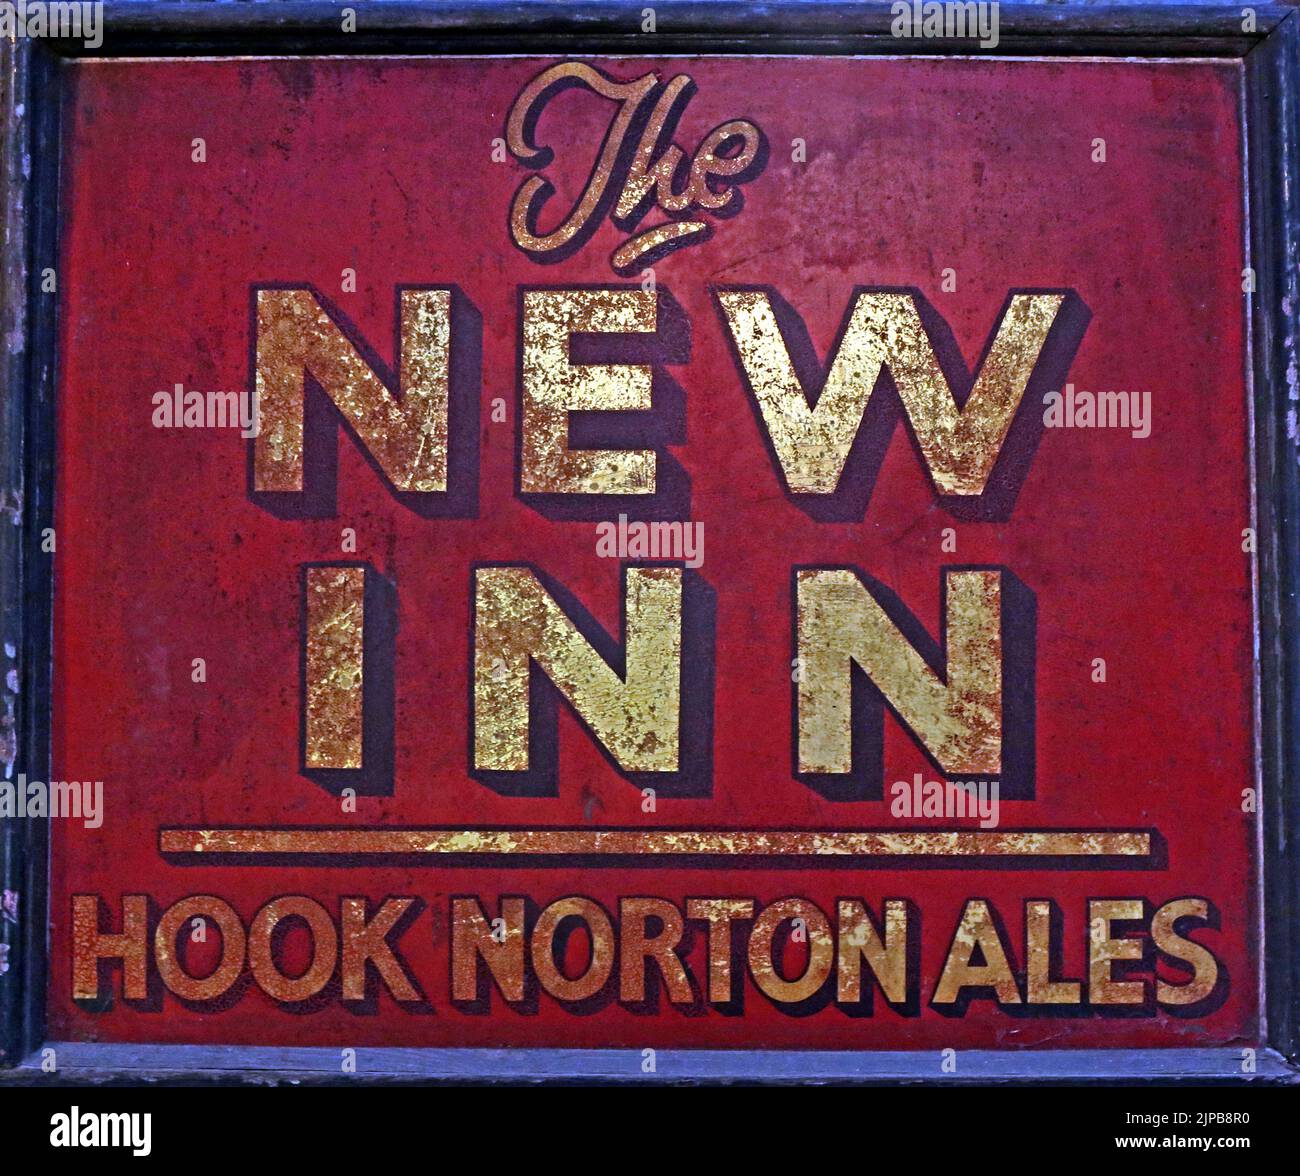 The New Inn - Hook Norton Ales klassisches Pub-Schild, Oxfordshire Craft Ale, Hook Norton, Banbury, Ochsen, ENGLAND, GROSSBRITANNIEN, OX15 5NY Stockfoto